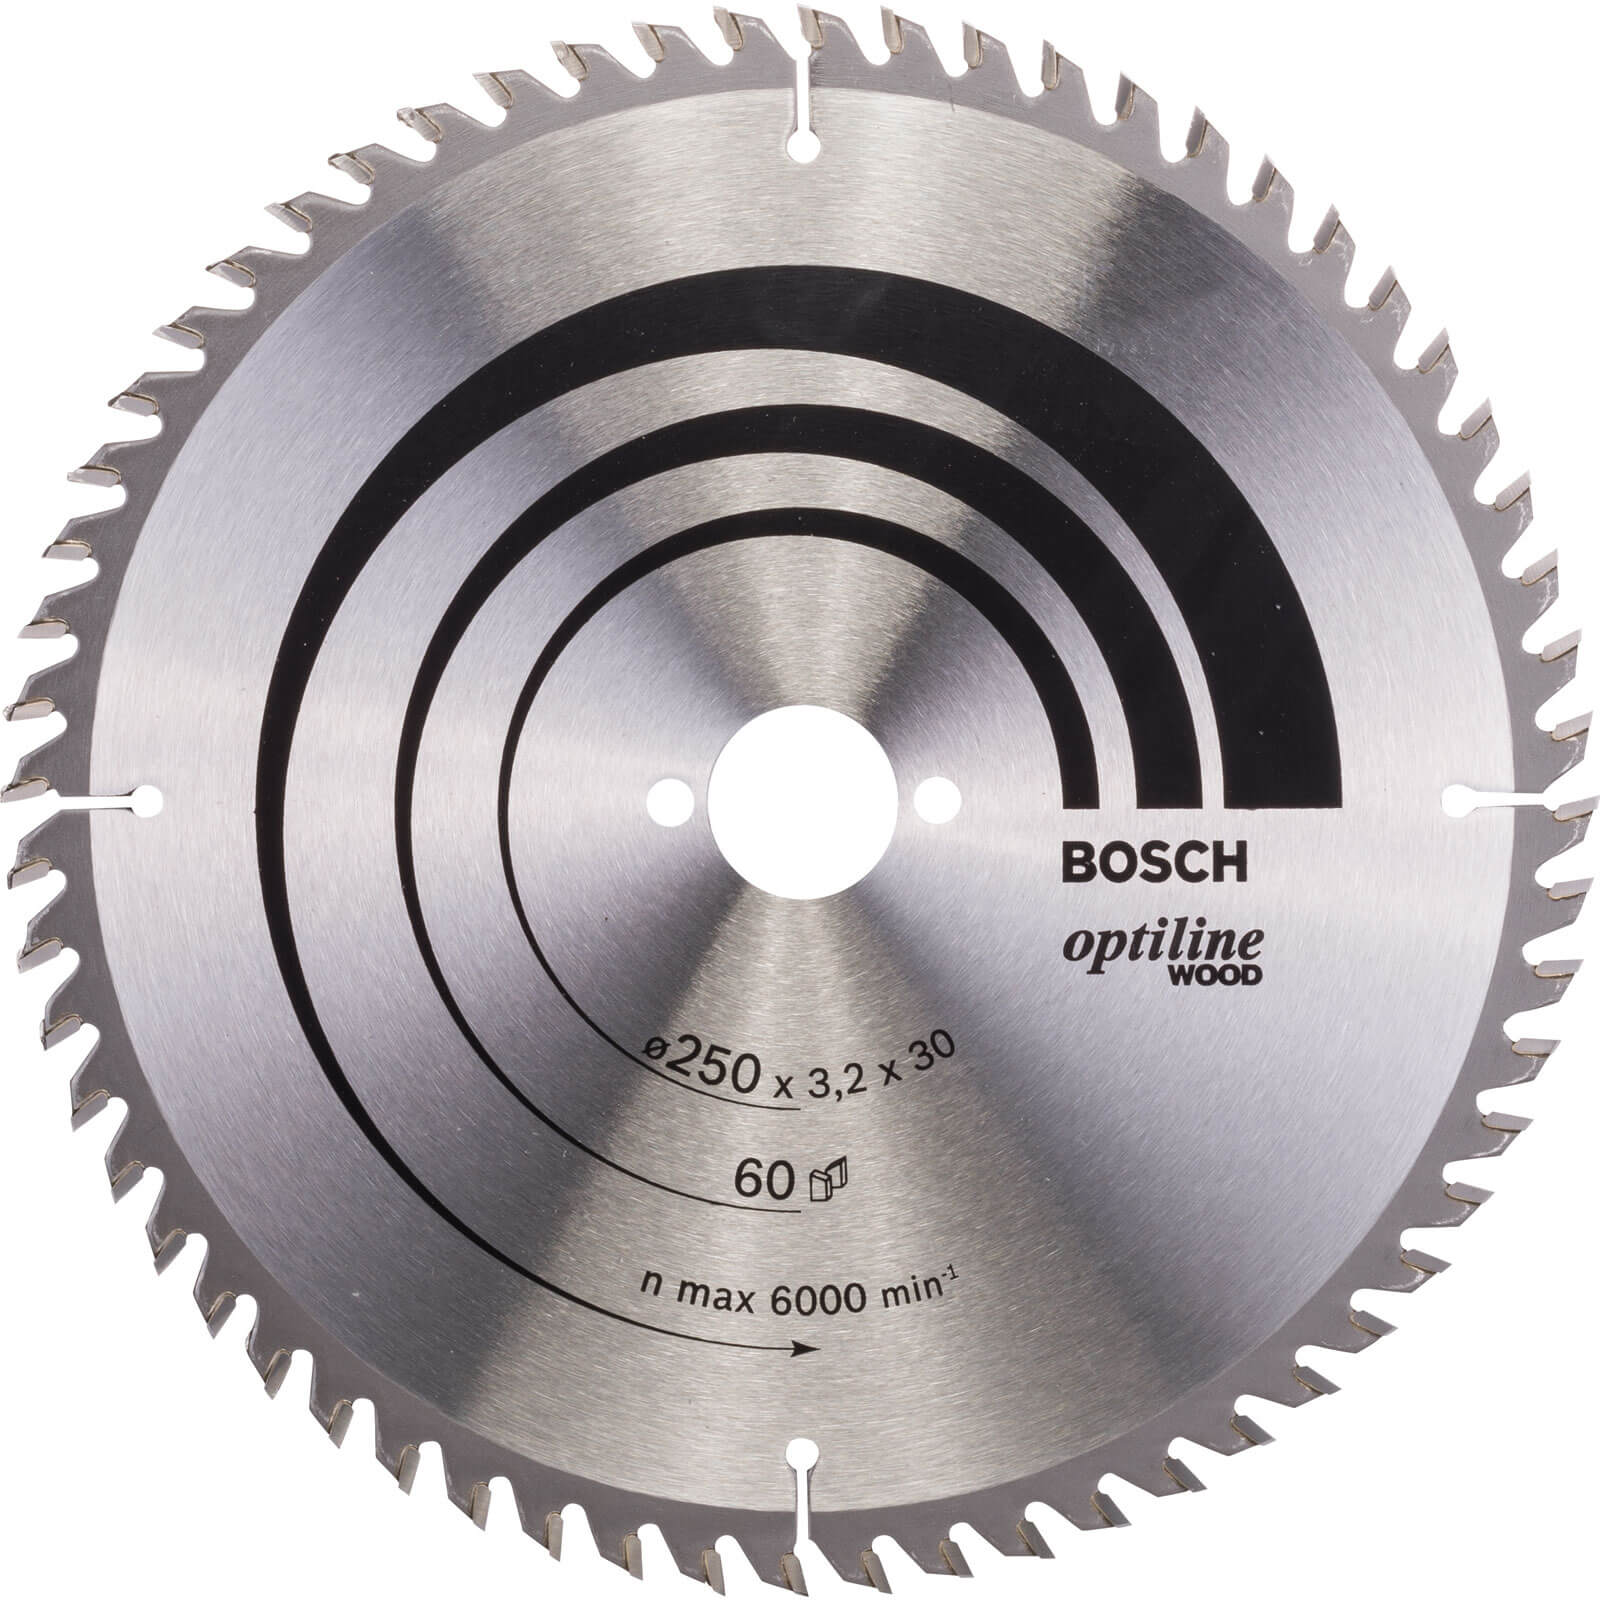 Photo of Bosch Optiline Wood Cutting Saw Blade 250mm 60t 30mm